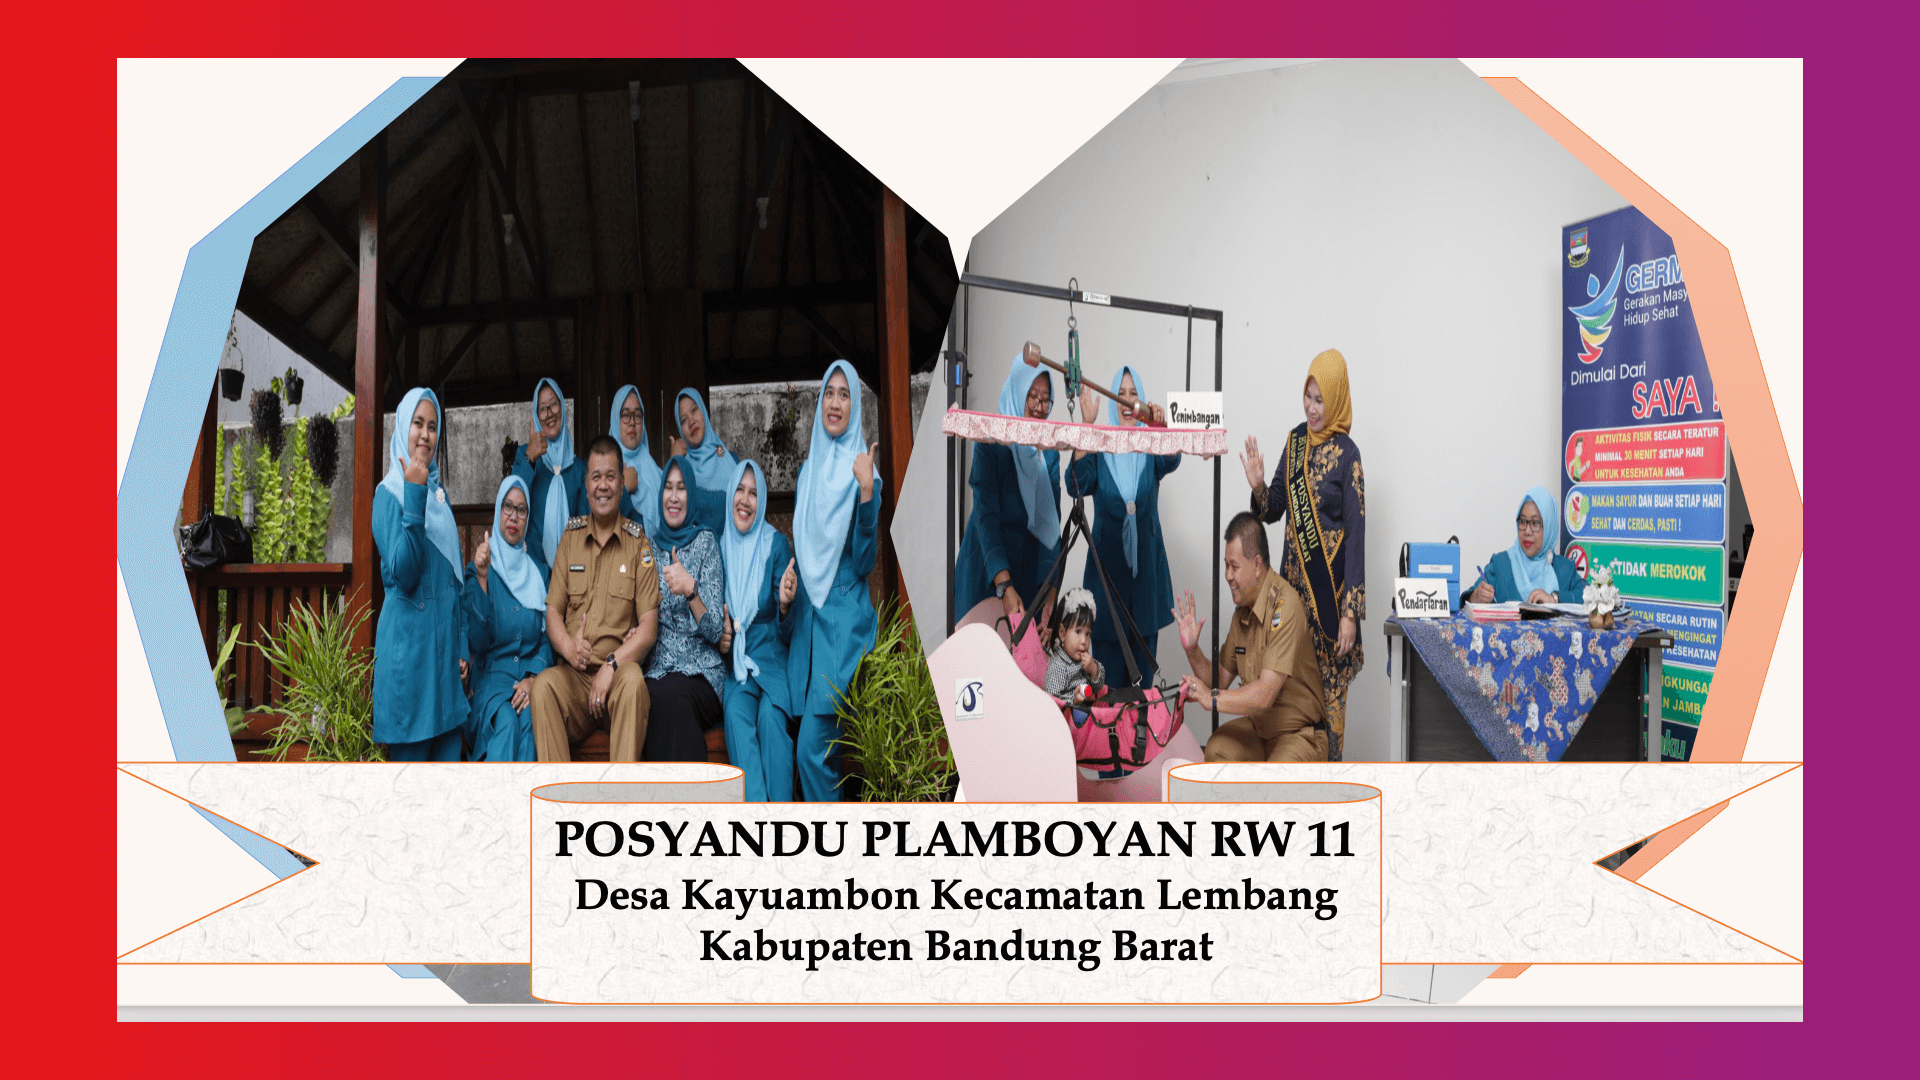 POSYANDU PLAMBOYAN RW 11 Desa Kayuambon Kecamatan Lembang Kabupaten Bandung Barat